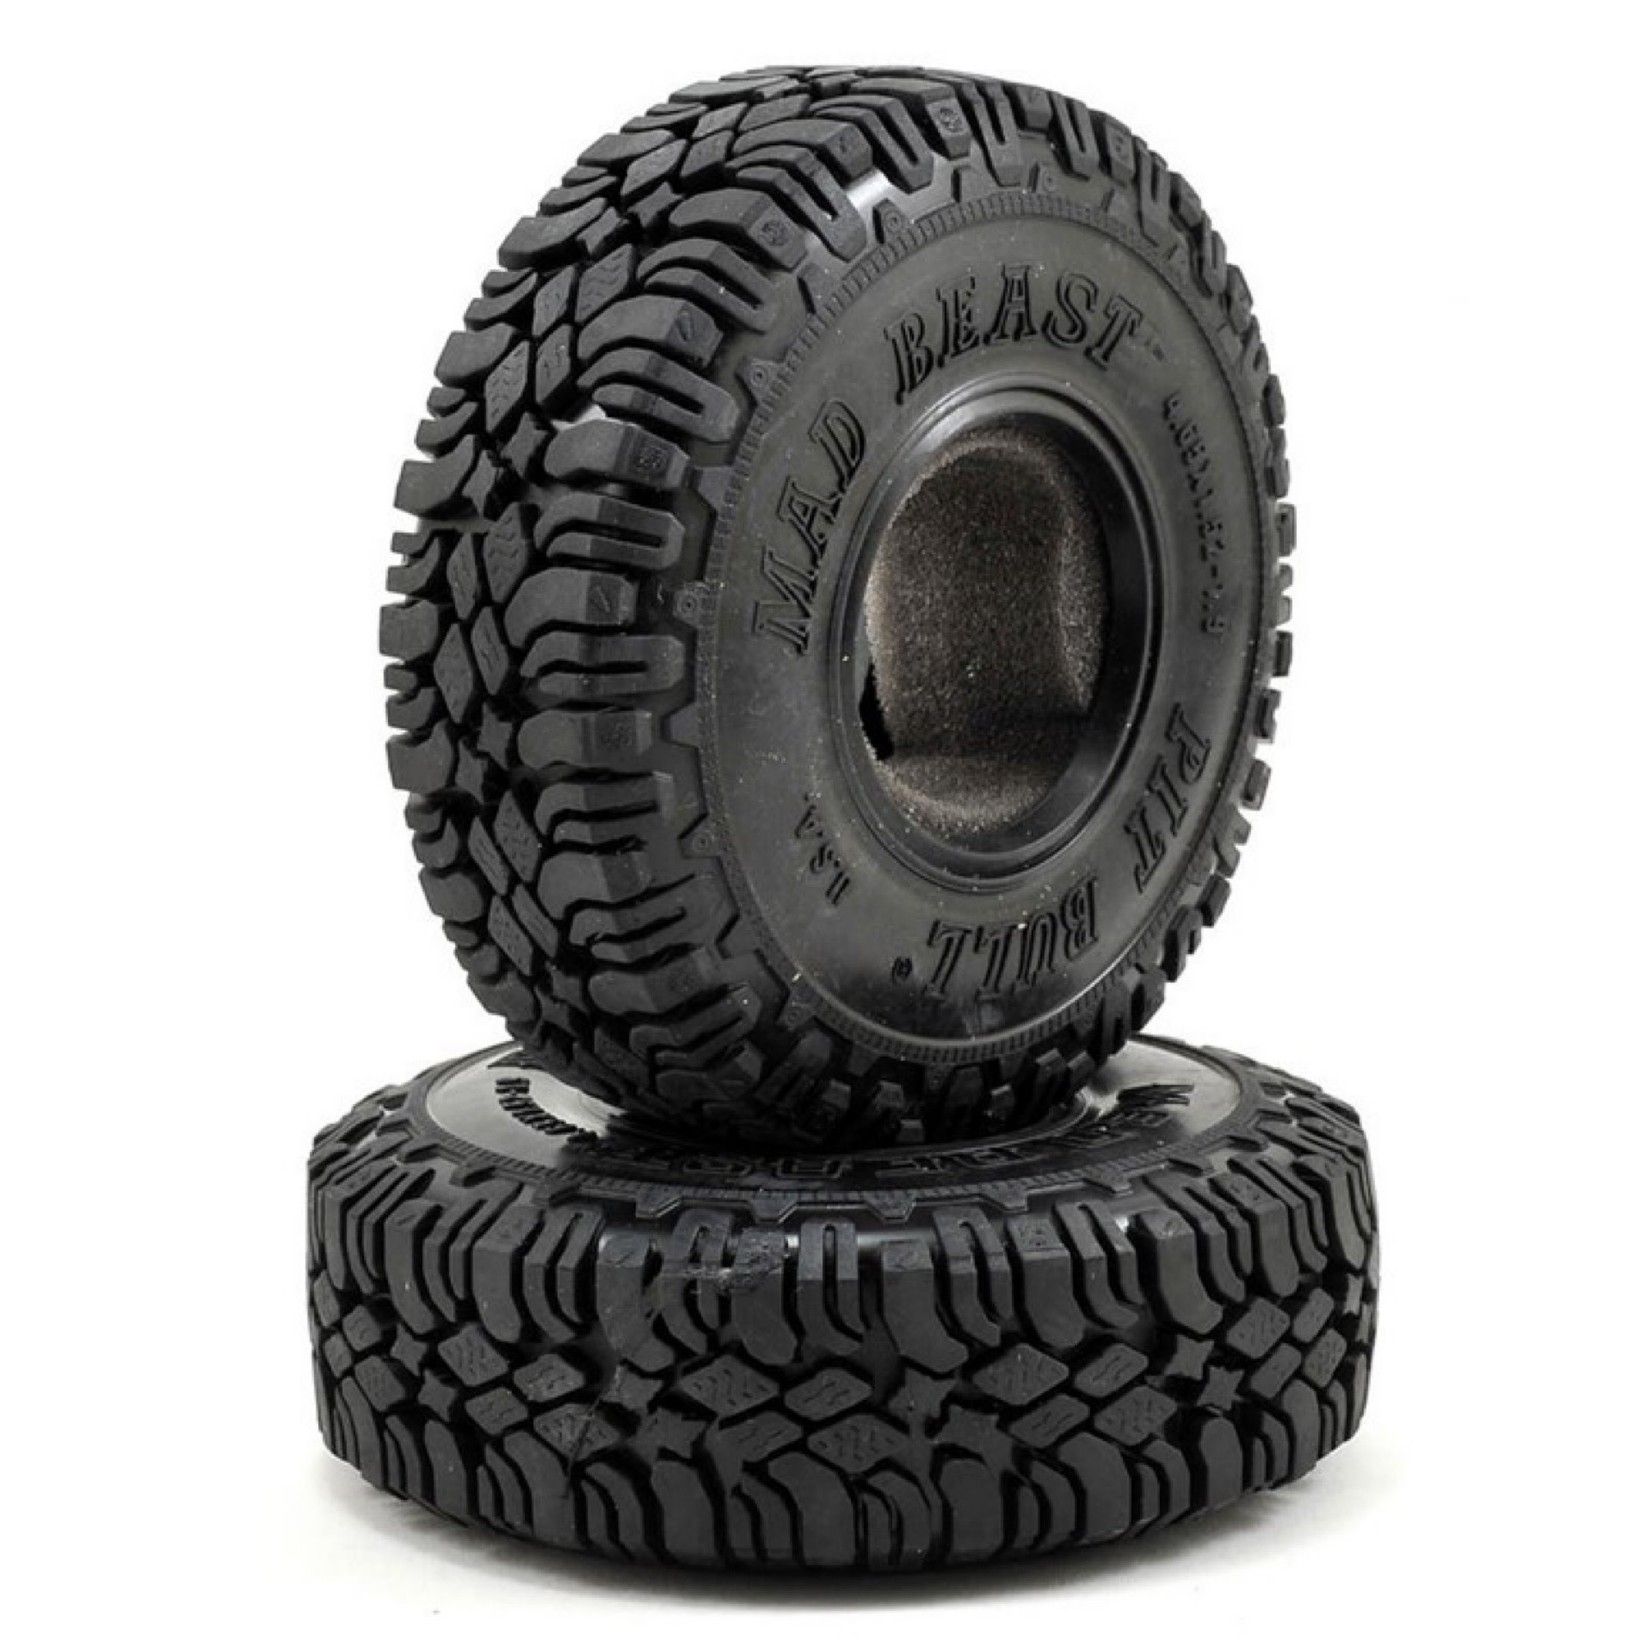 Pit Bull Pit Bull Tires Mad Beast 1.9" Scale Rock Crawler Tires (2) (Komp) w/Foam #PB9007NK